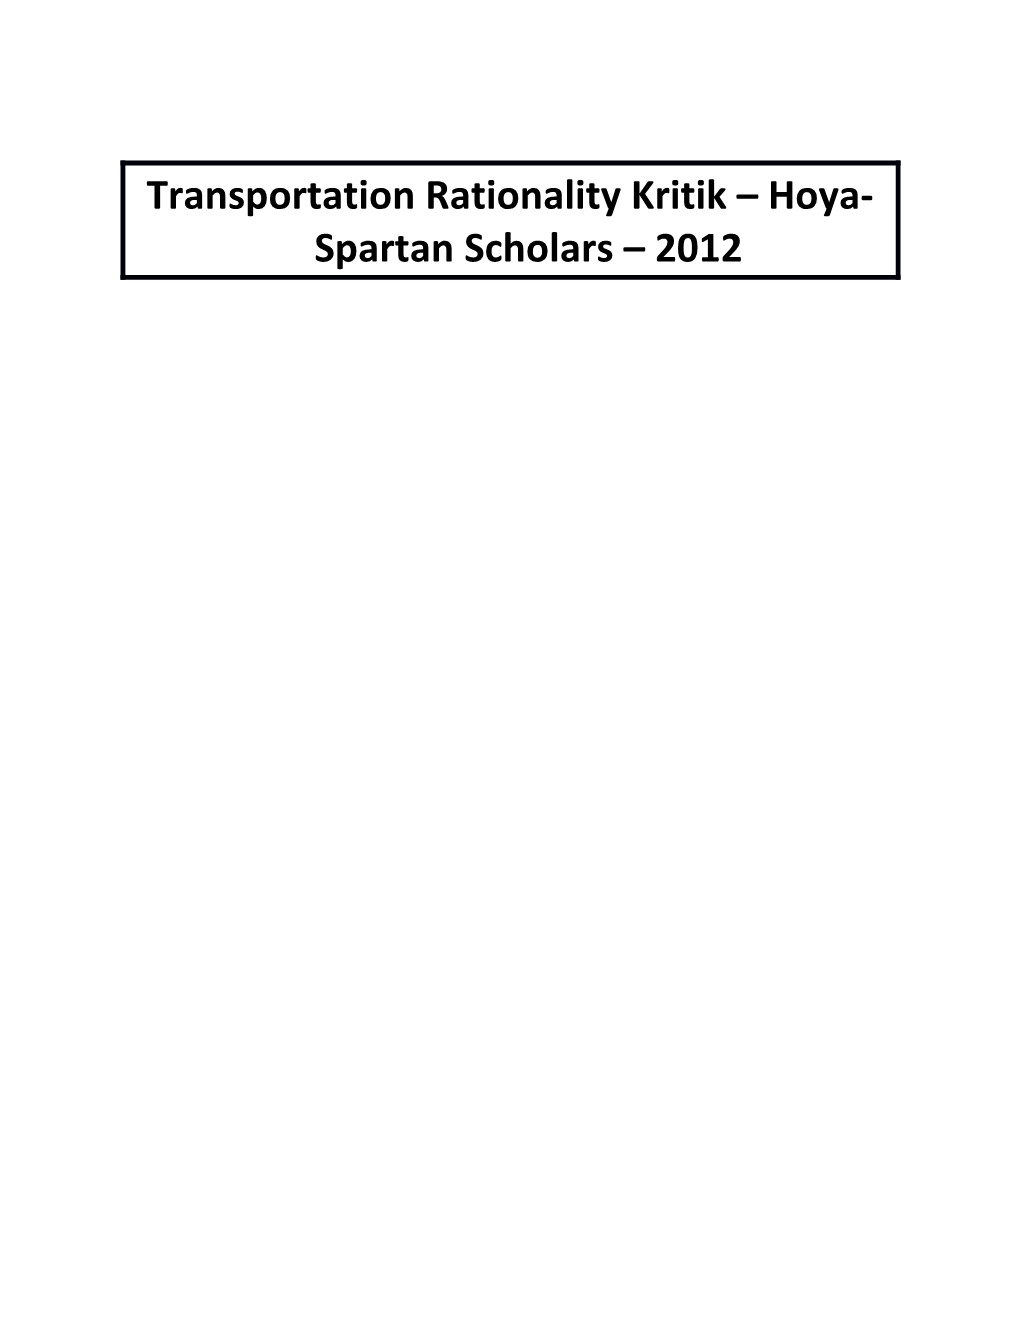 Transportation Rationality Kritik Hoya-Spartan Scholars 2012